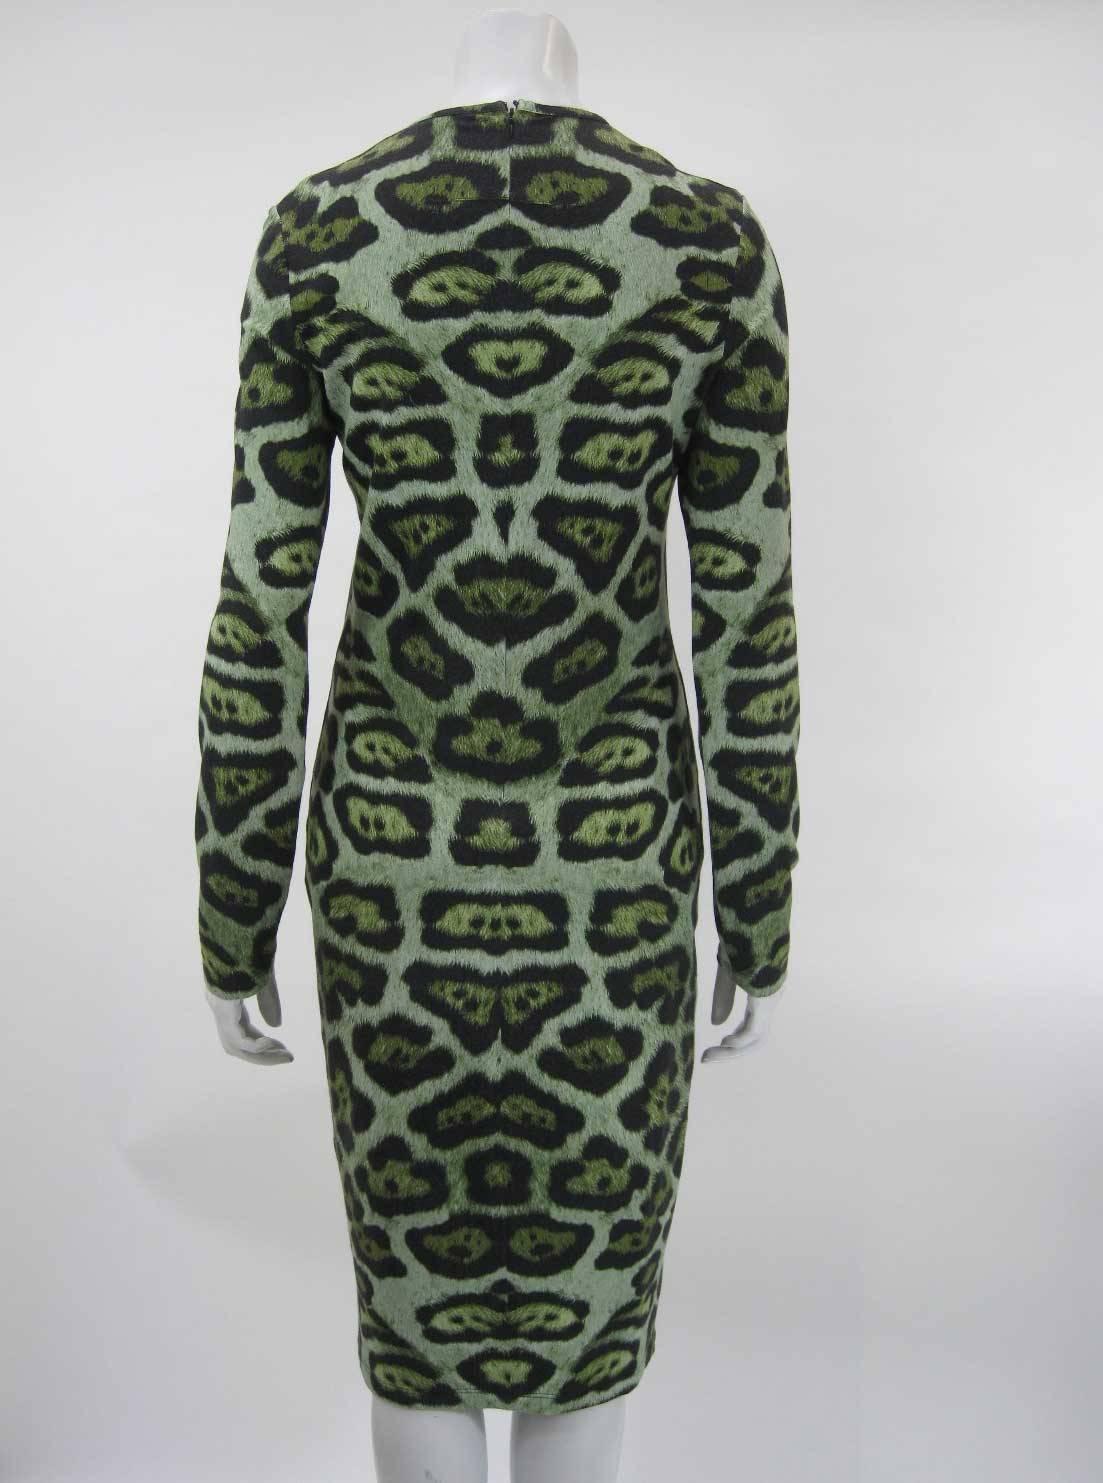 Women's Givenchy Leopard Print Stretch Jersey Dress